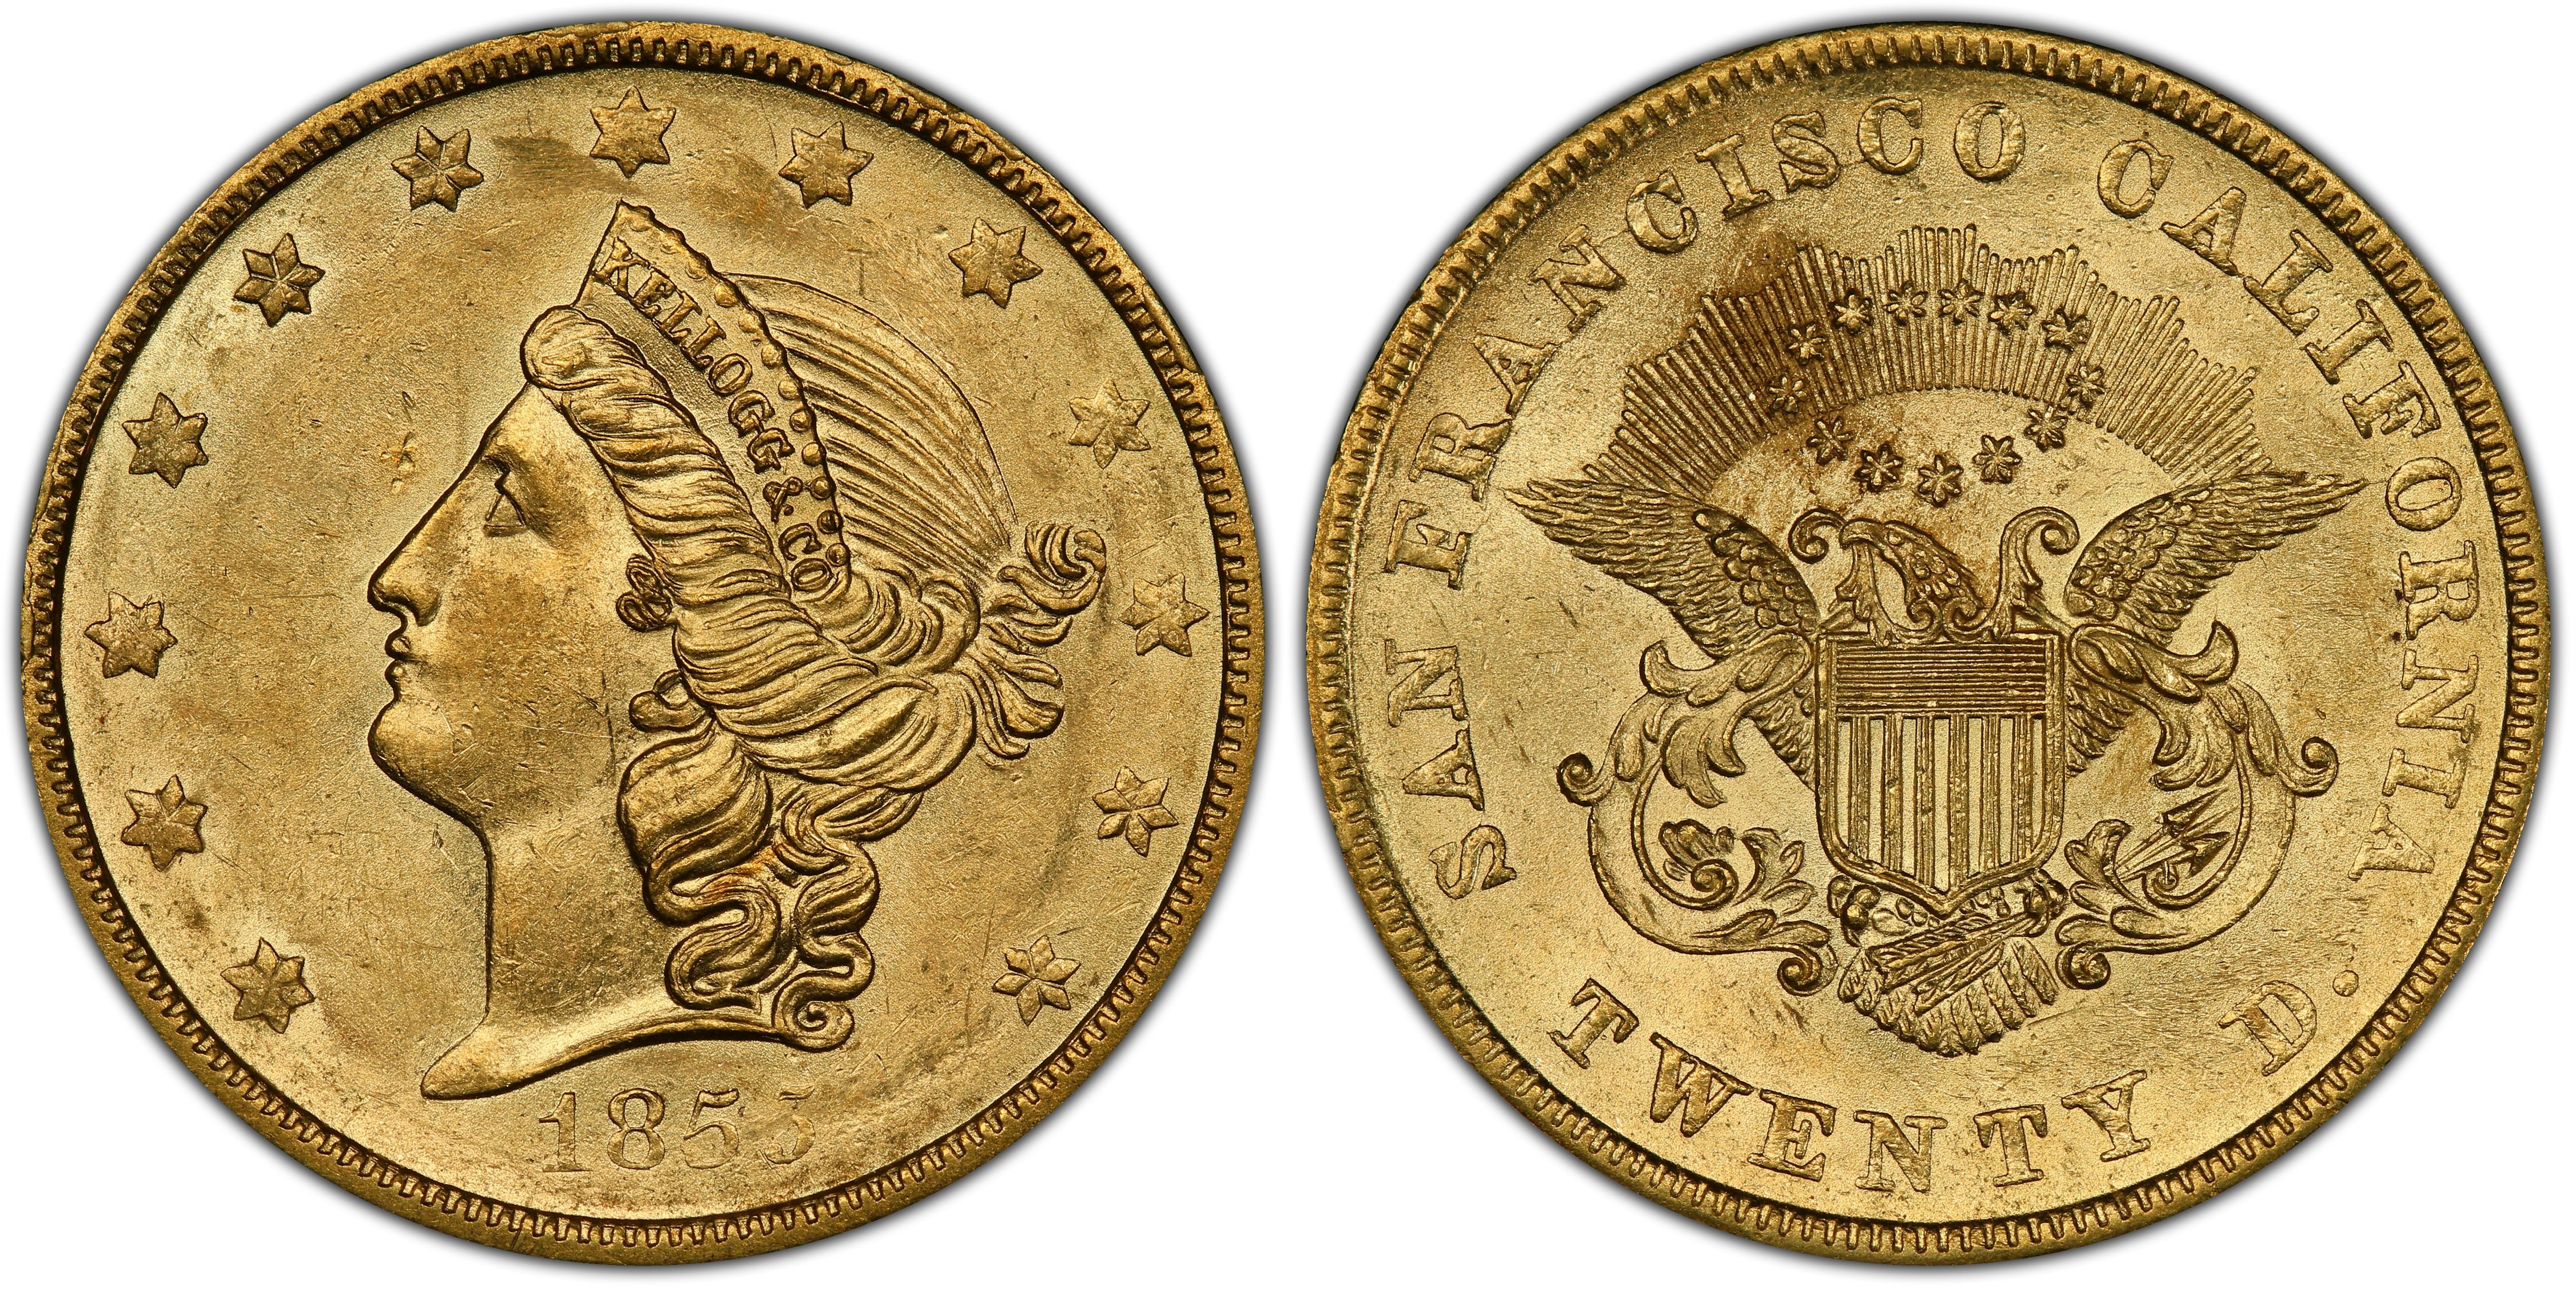 1855 $20 Kellogg & Co. (Regular Strike) California Gold - PCGS